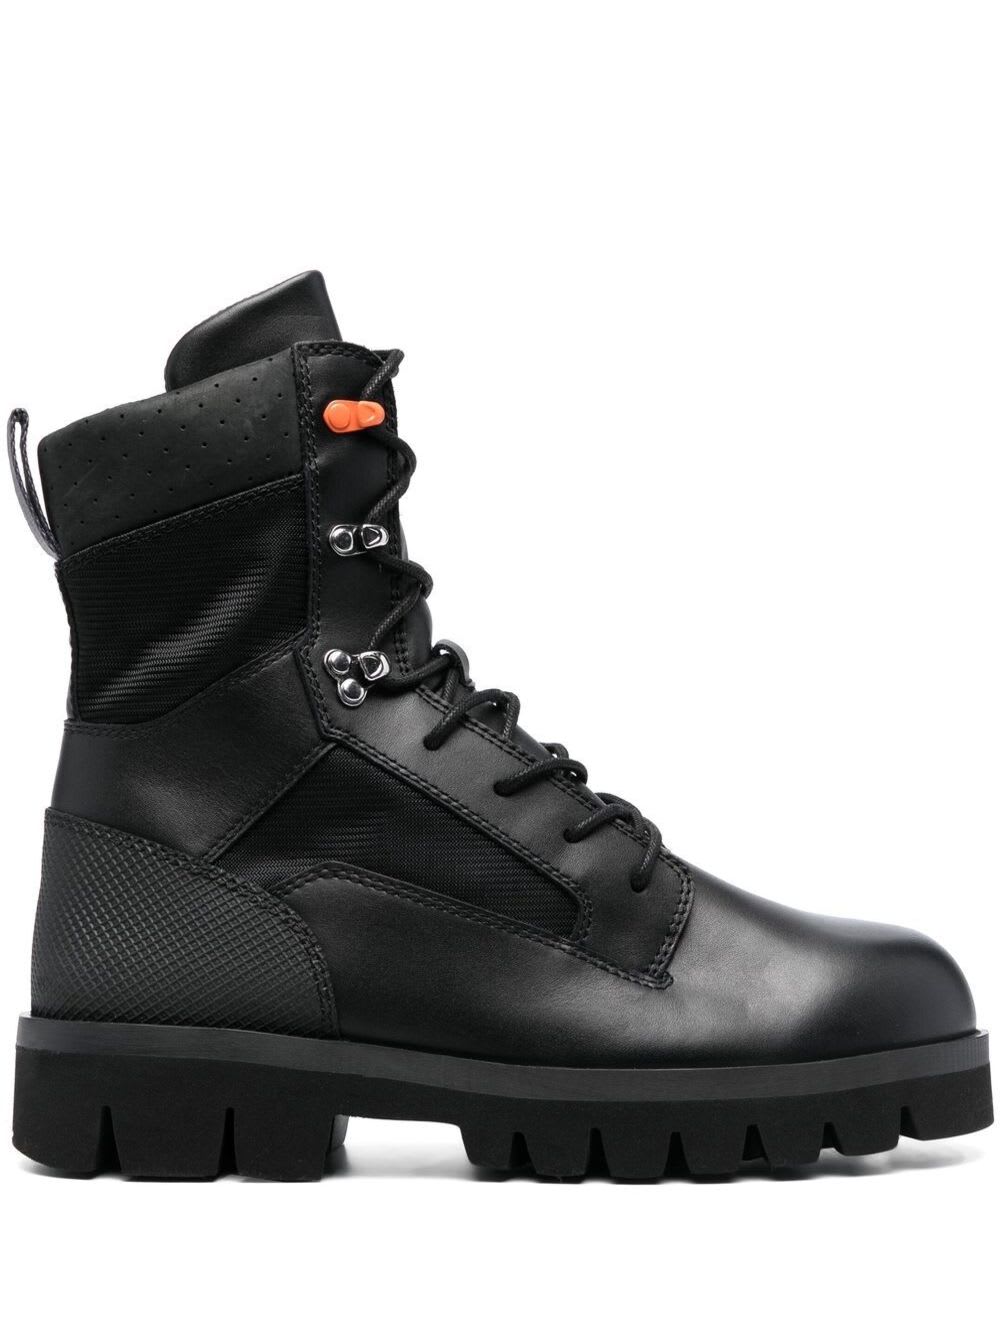 HERON PRESTON Military Boots Black Black